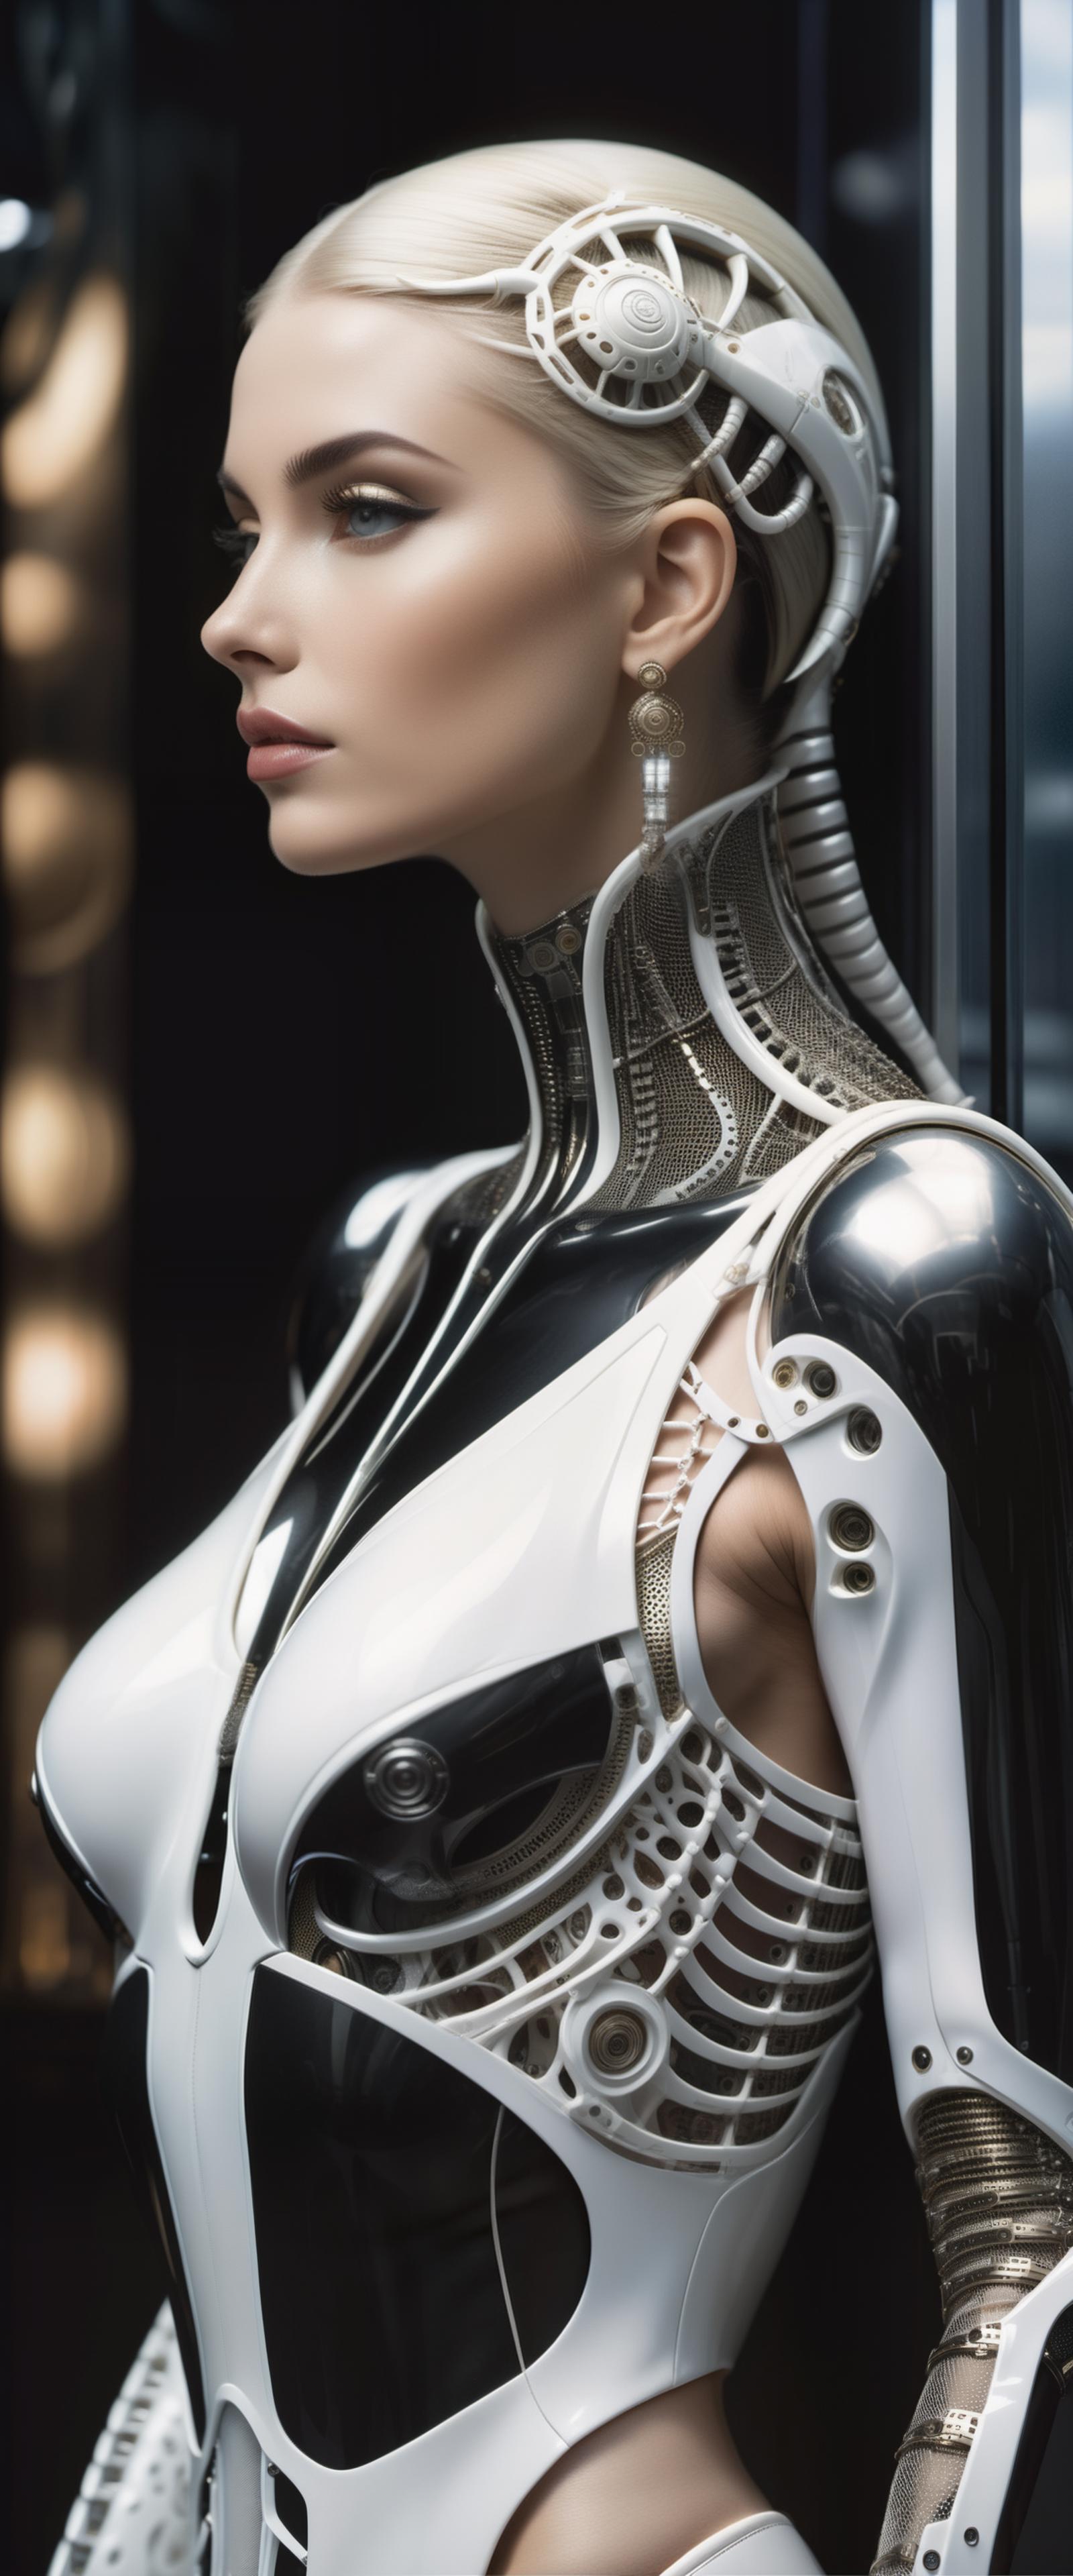 AI model image by AbdallahAlswa80